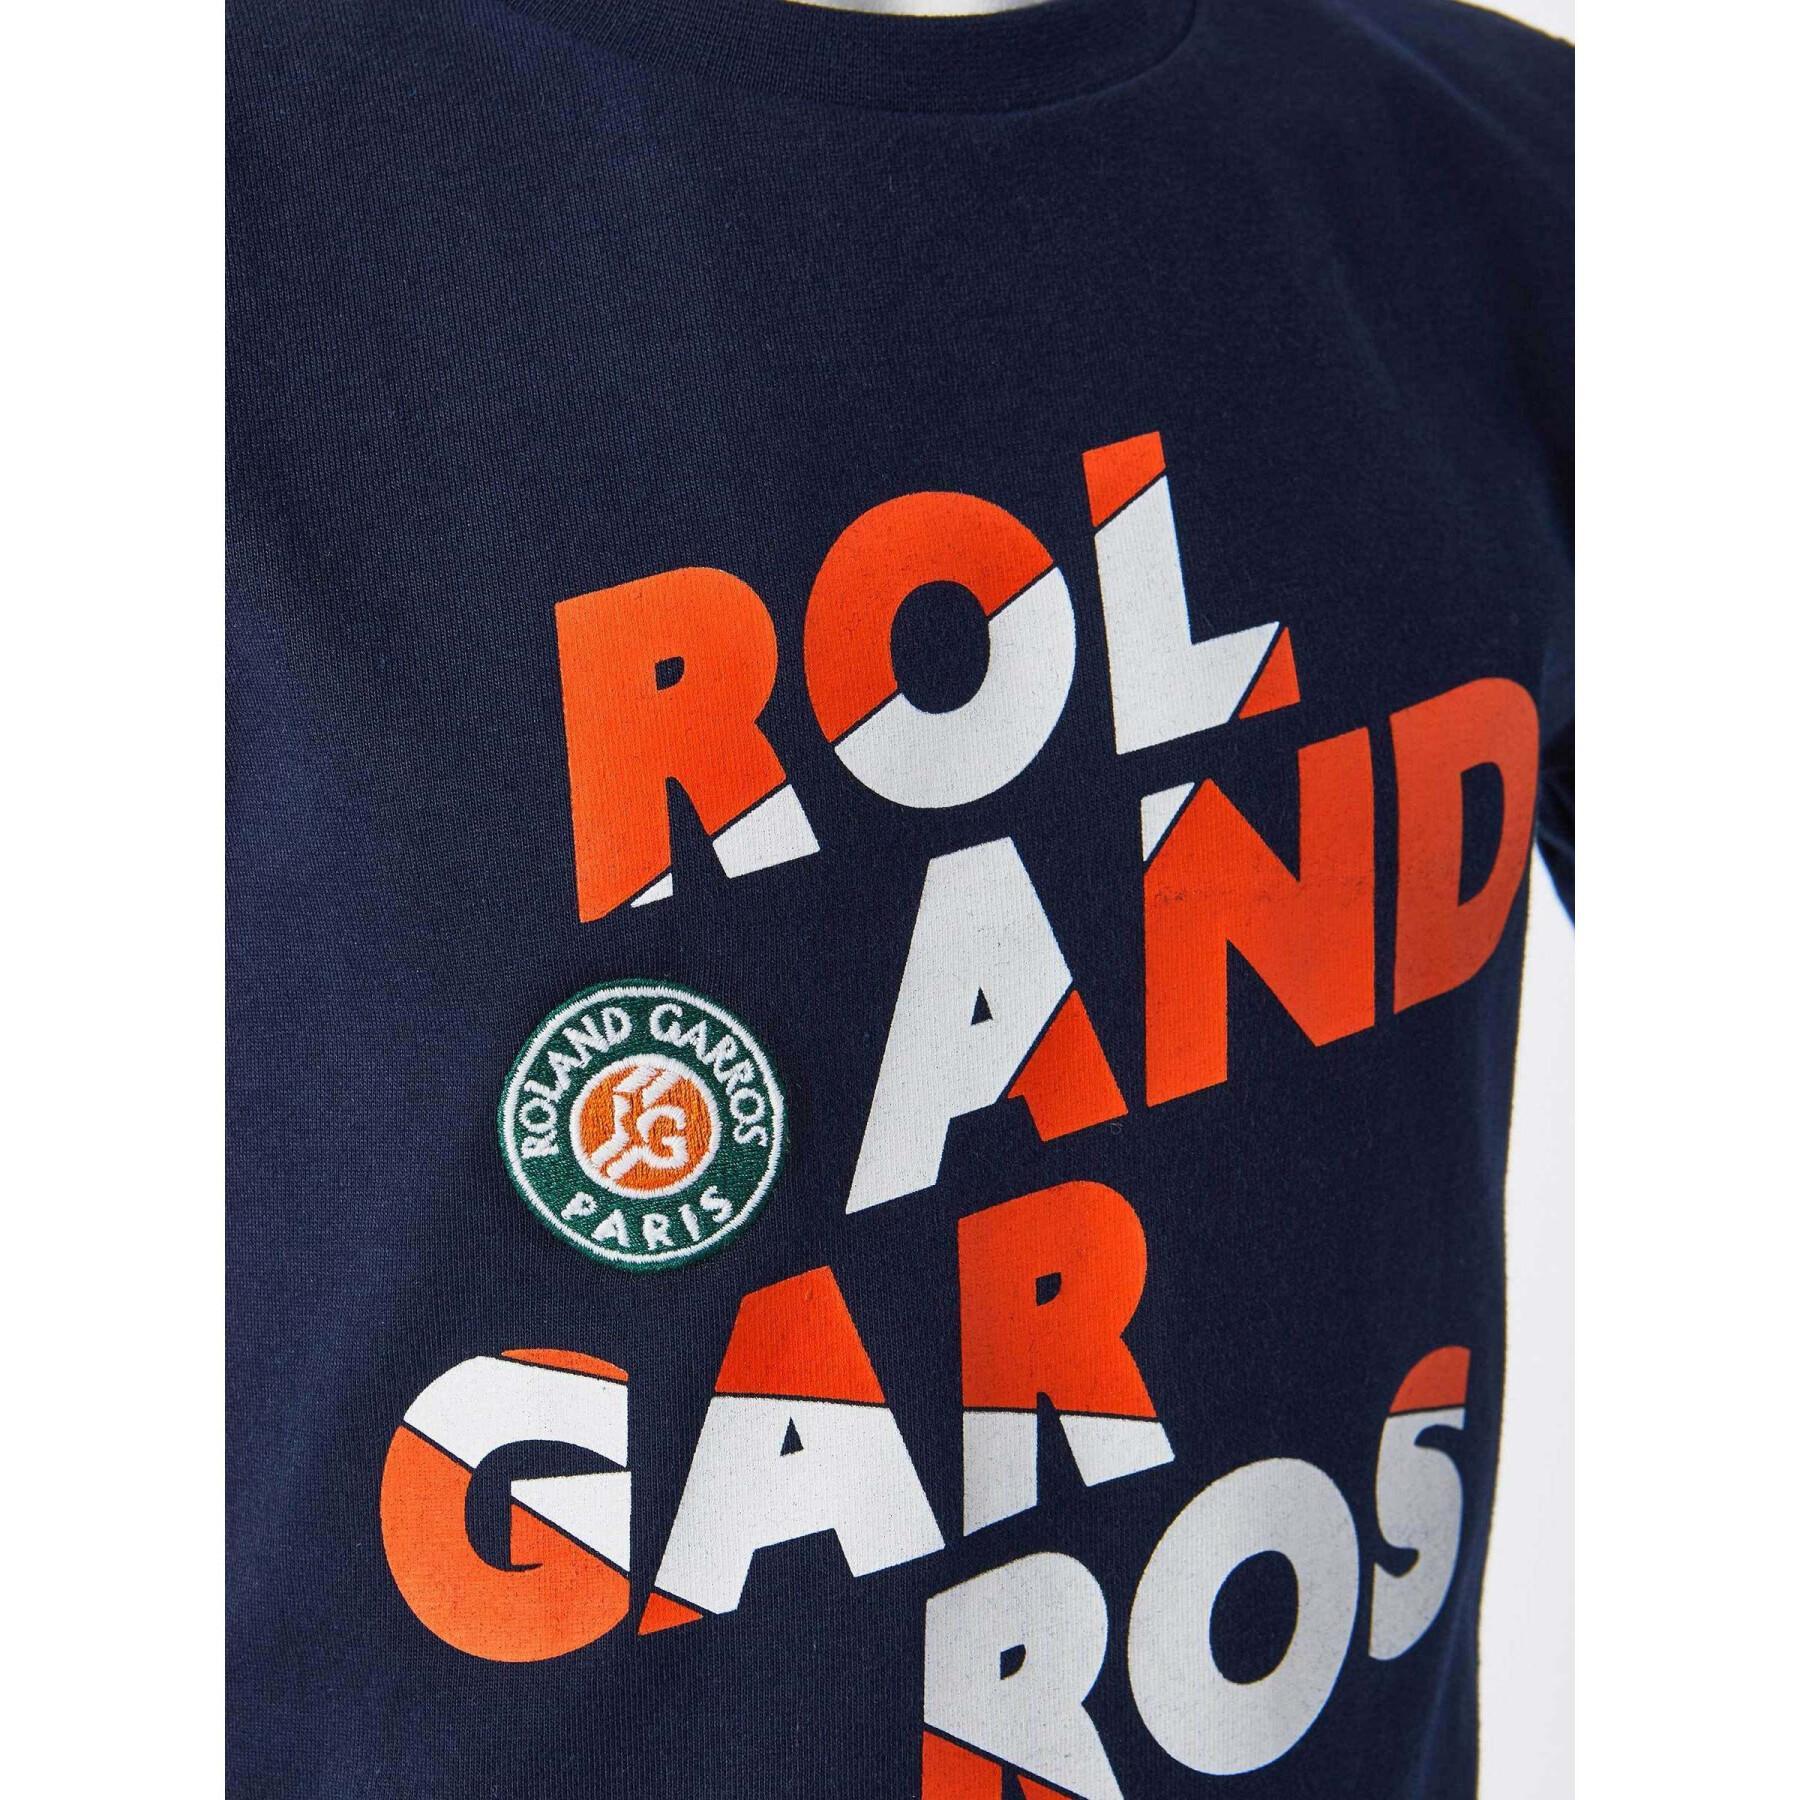 Kinder-T-shirt Roland Garros